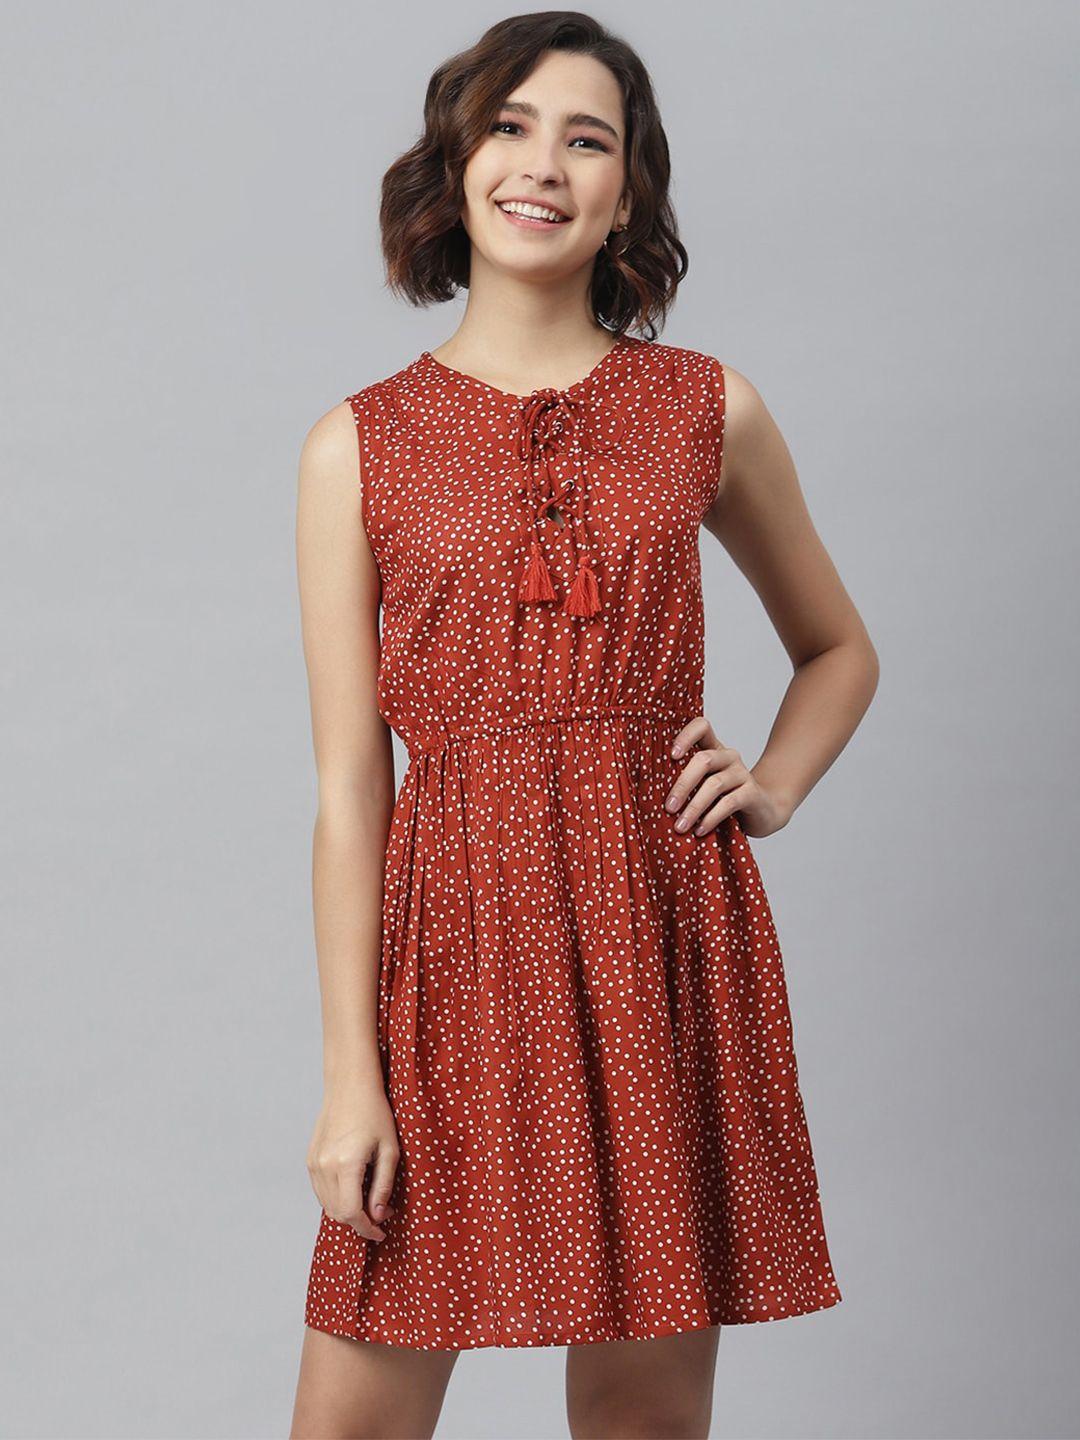 stylestone women rust polka dots printed fit and flare dress